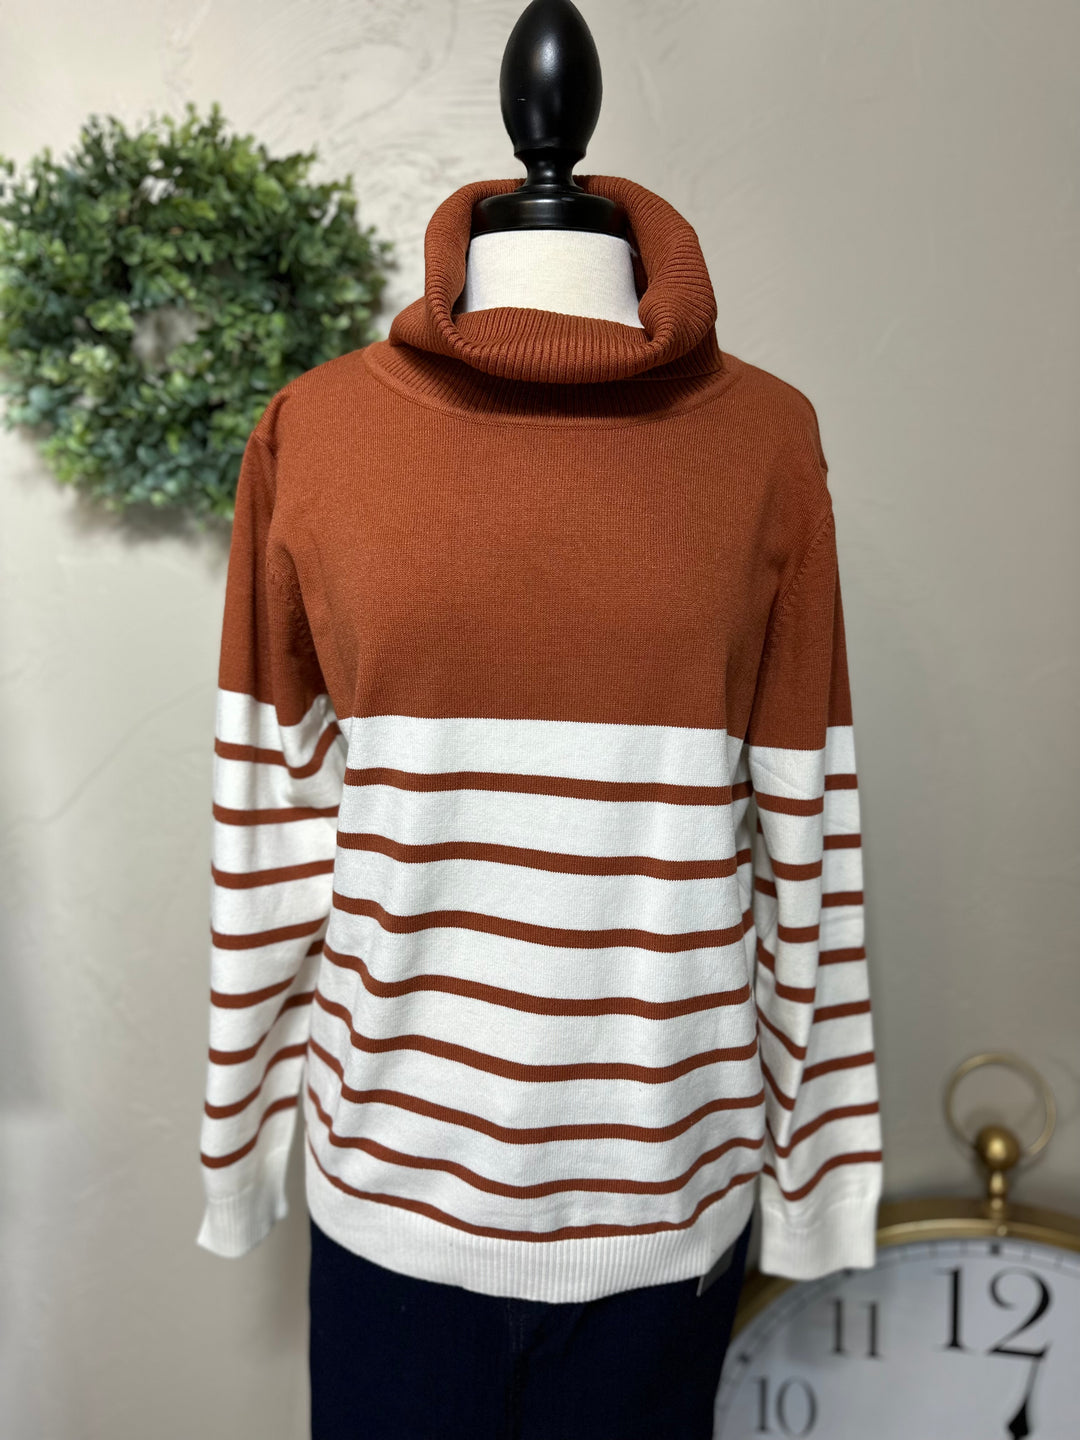 Liza's Rust Striped Turtleneck Sweater